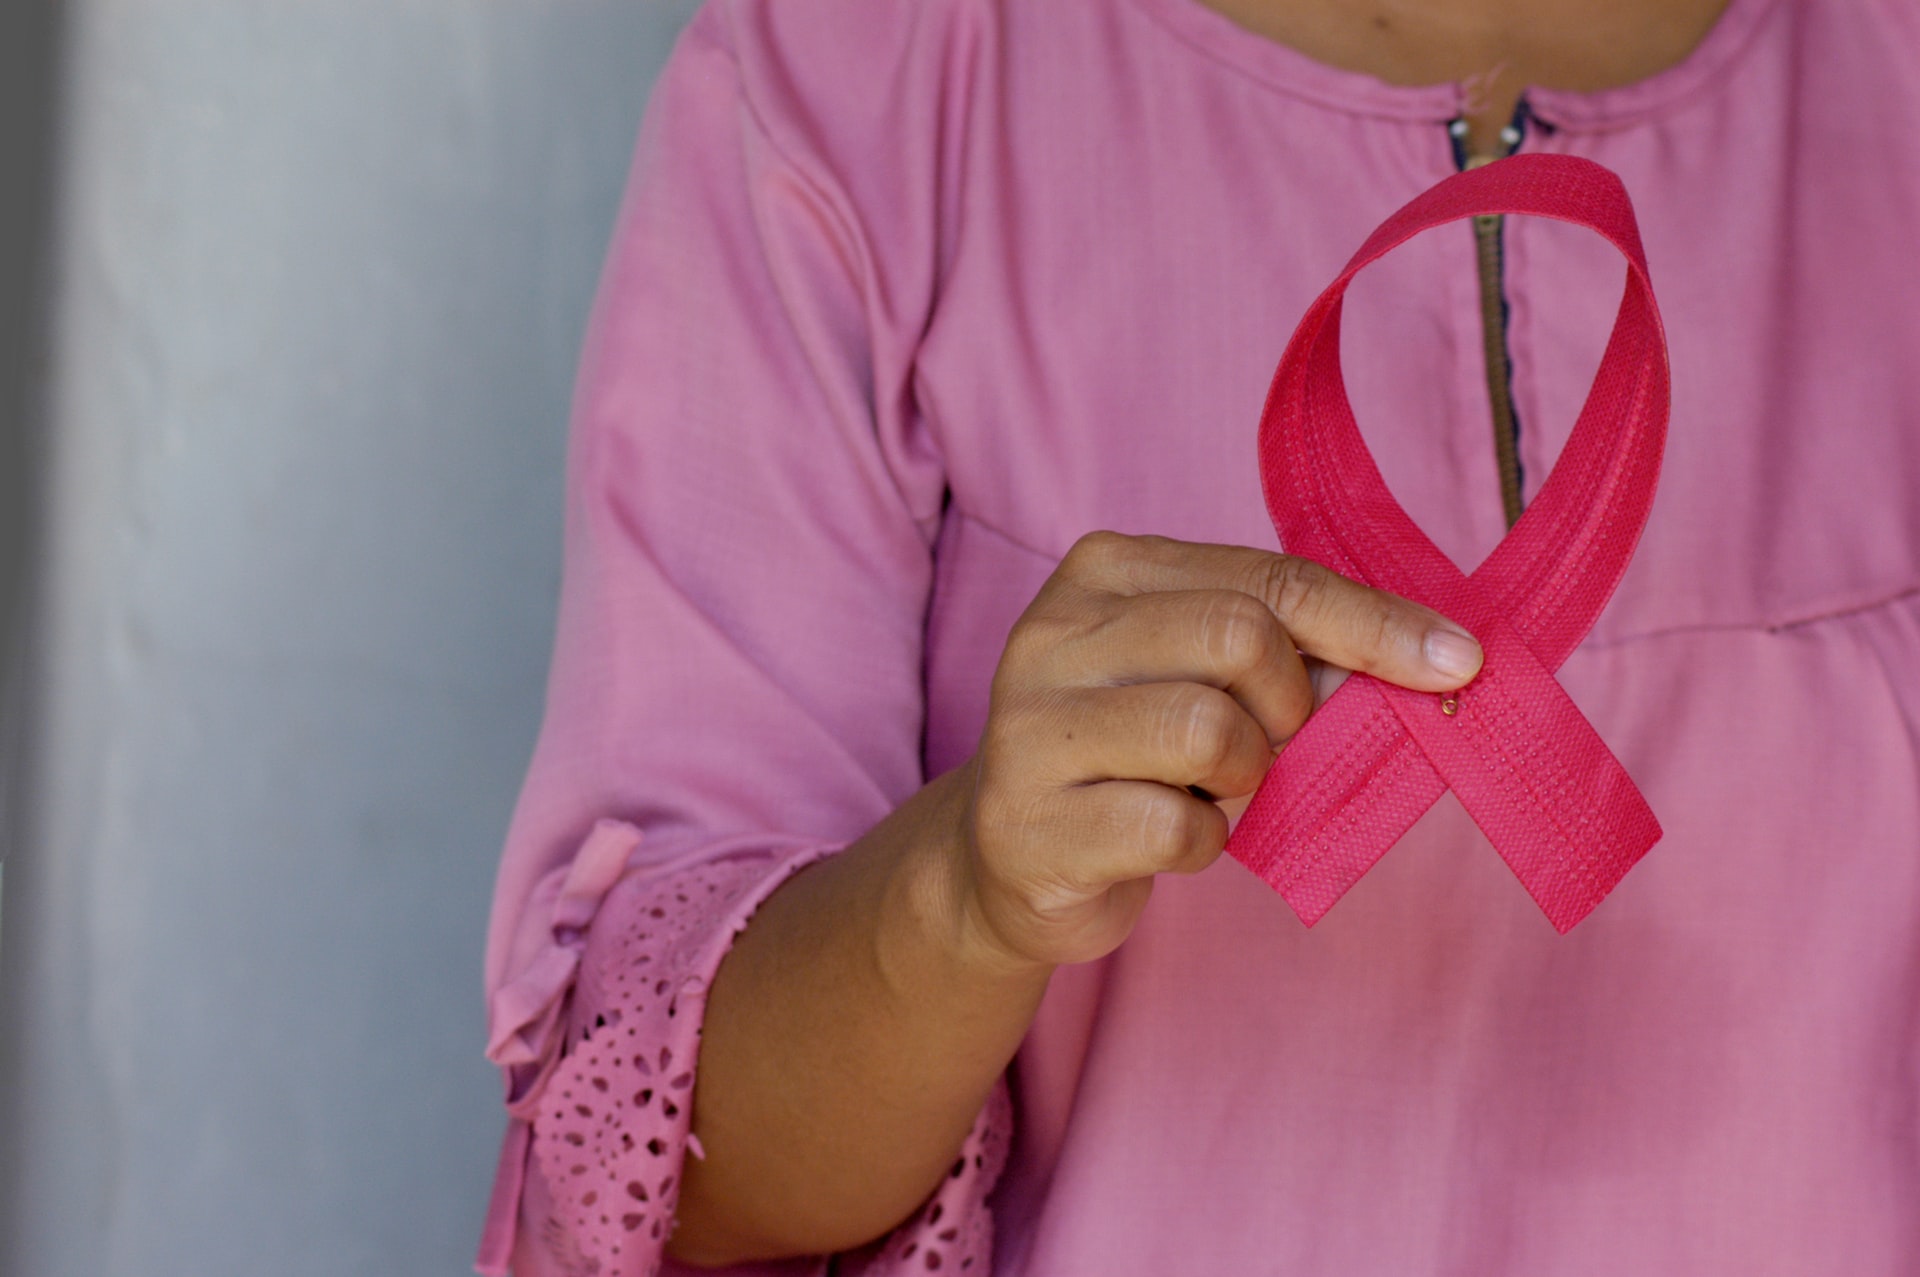 Surrogacy for Breast Cancer Survivors